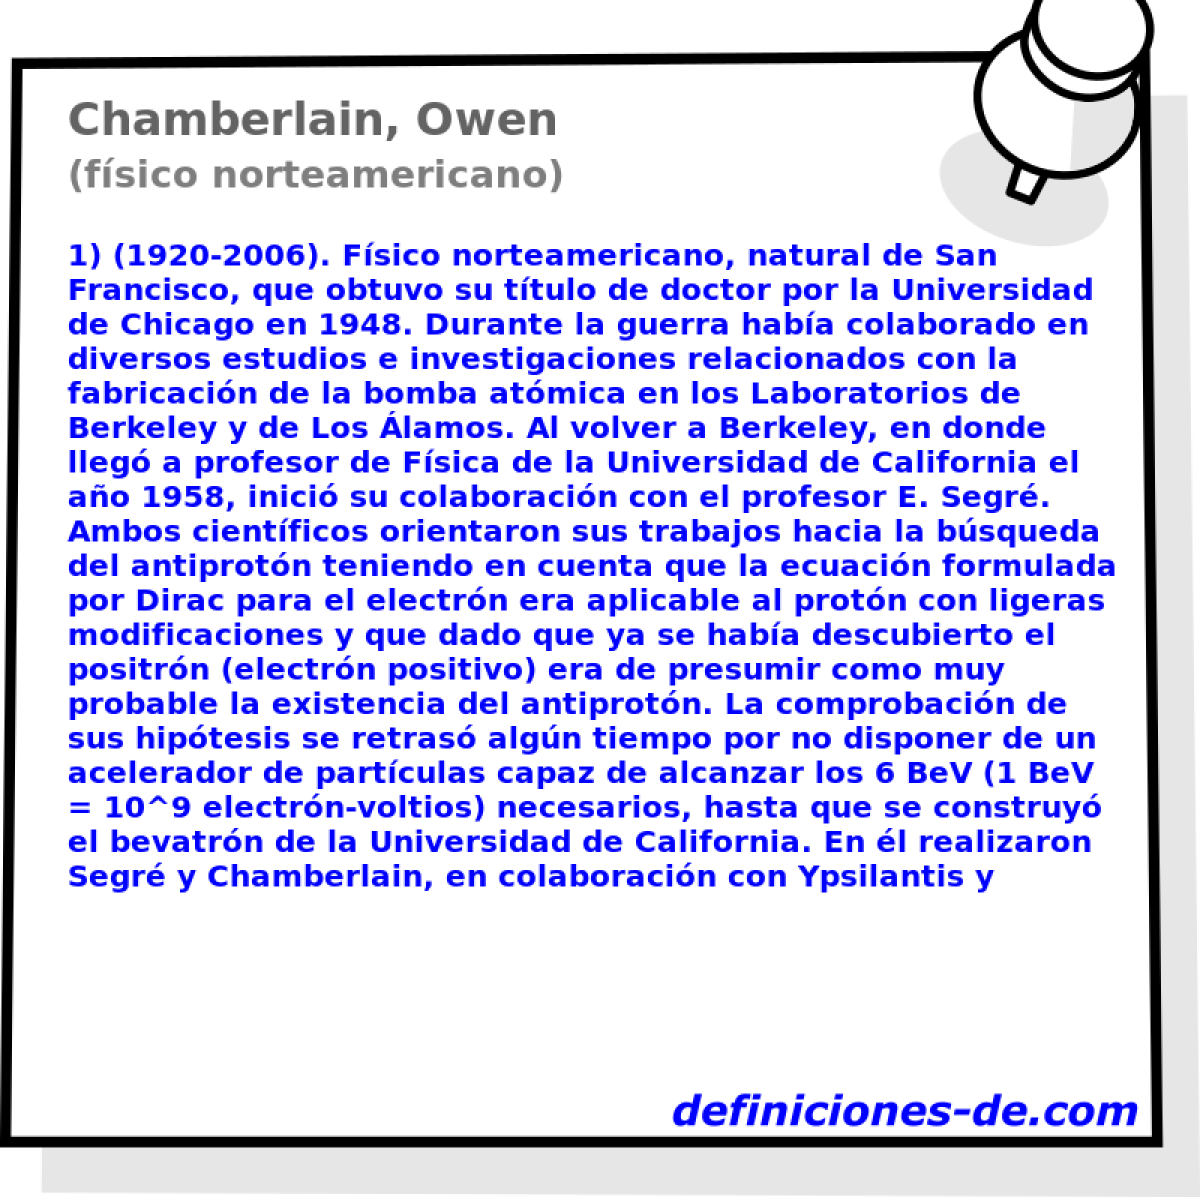 Chamberlain, Owen (fsico norteamericano)